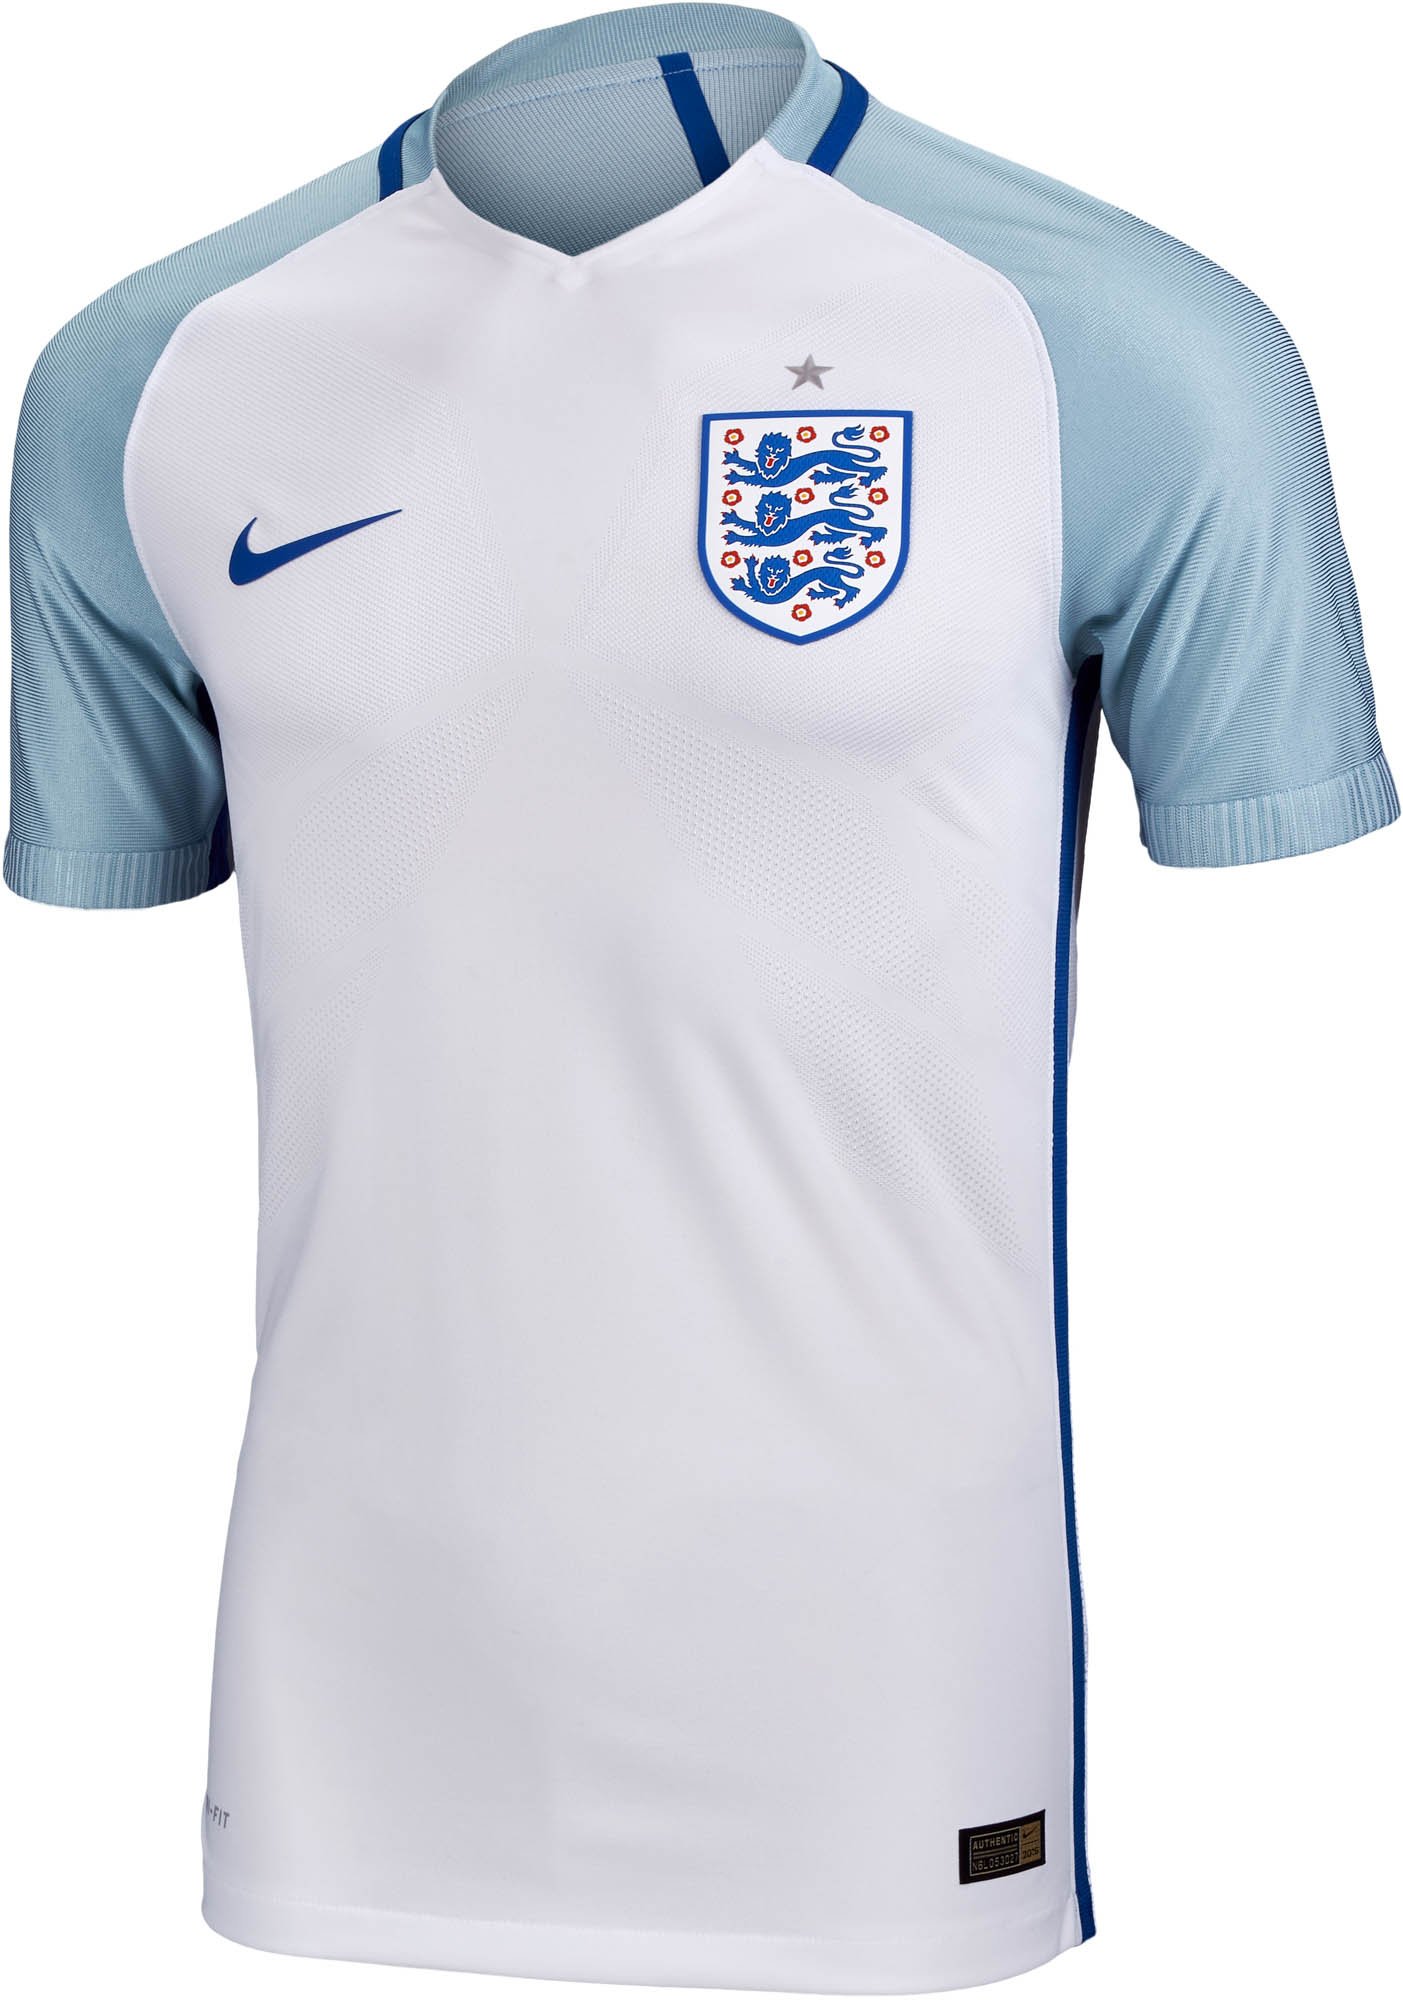 england jersey 2016